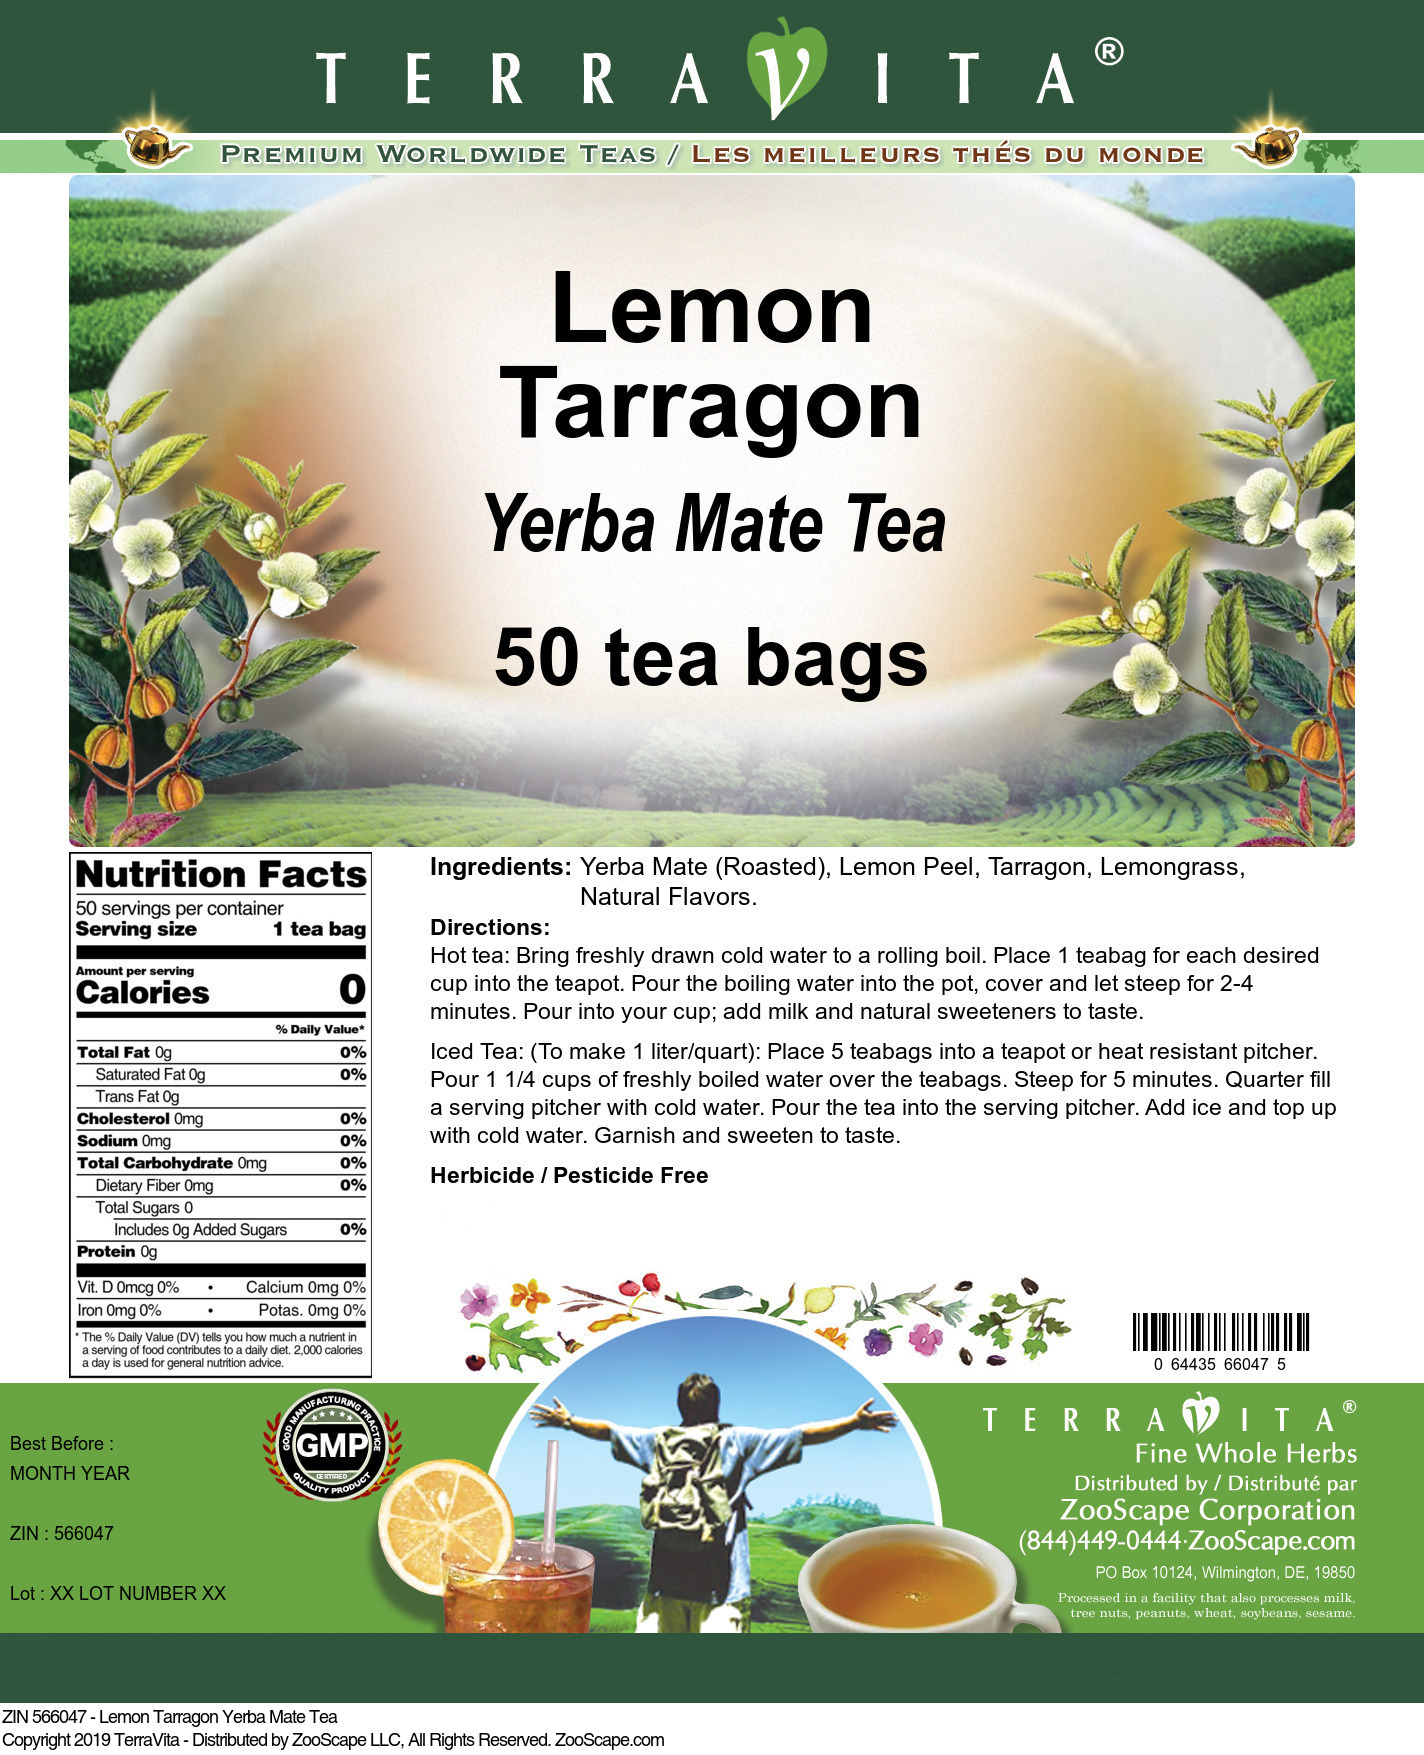 Lemon Tarragon Yerba Mate Tea - Label